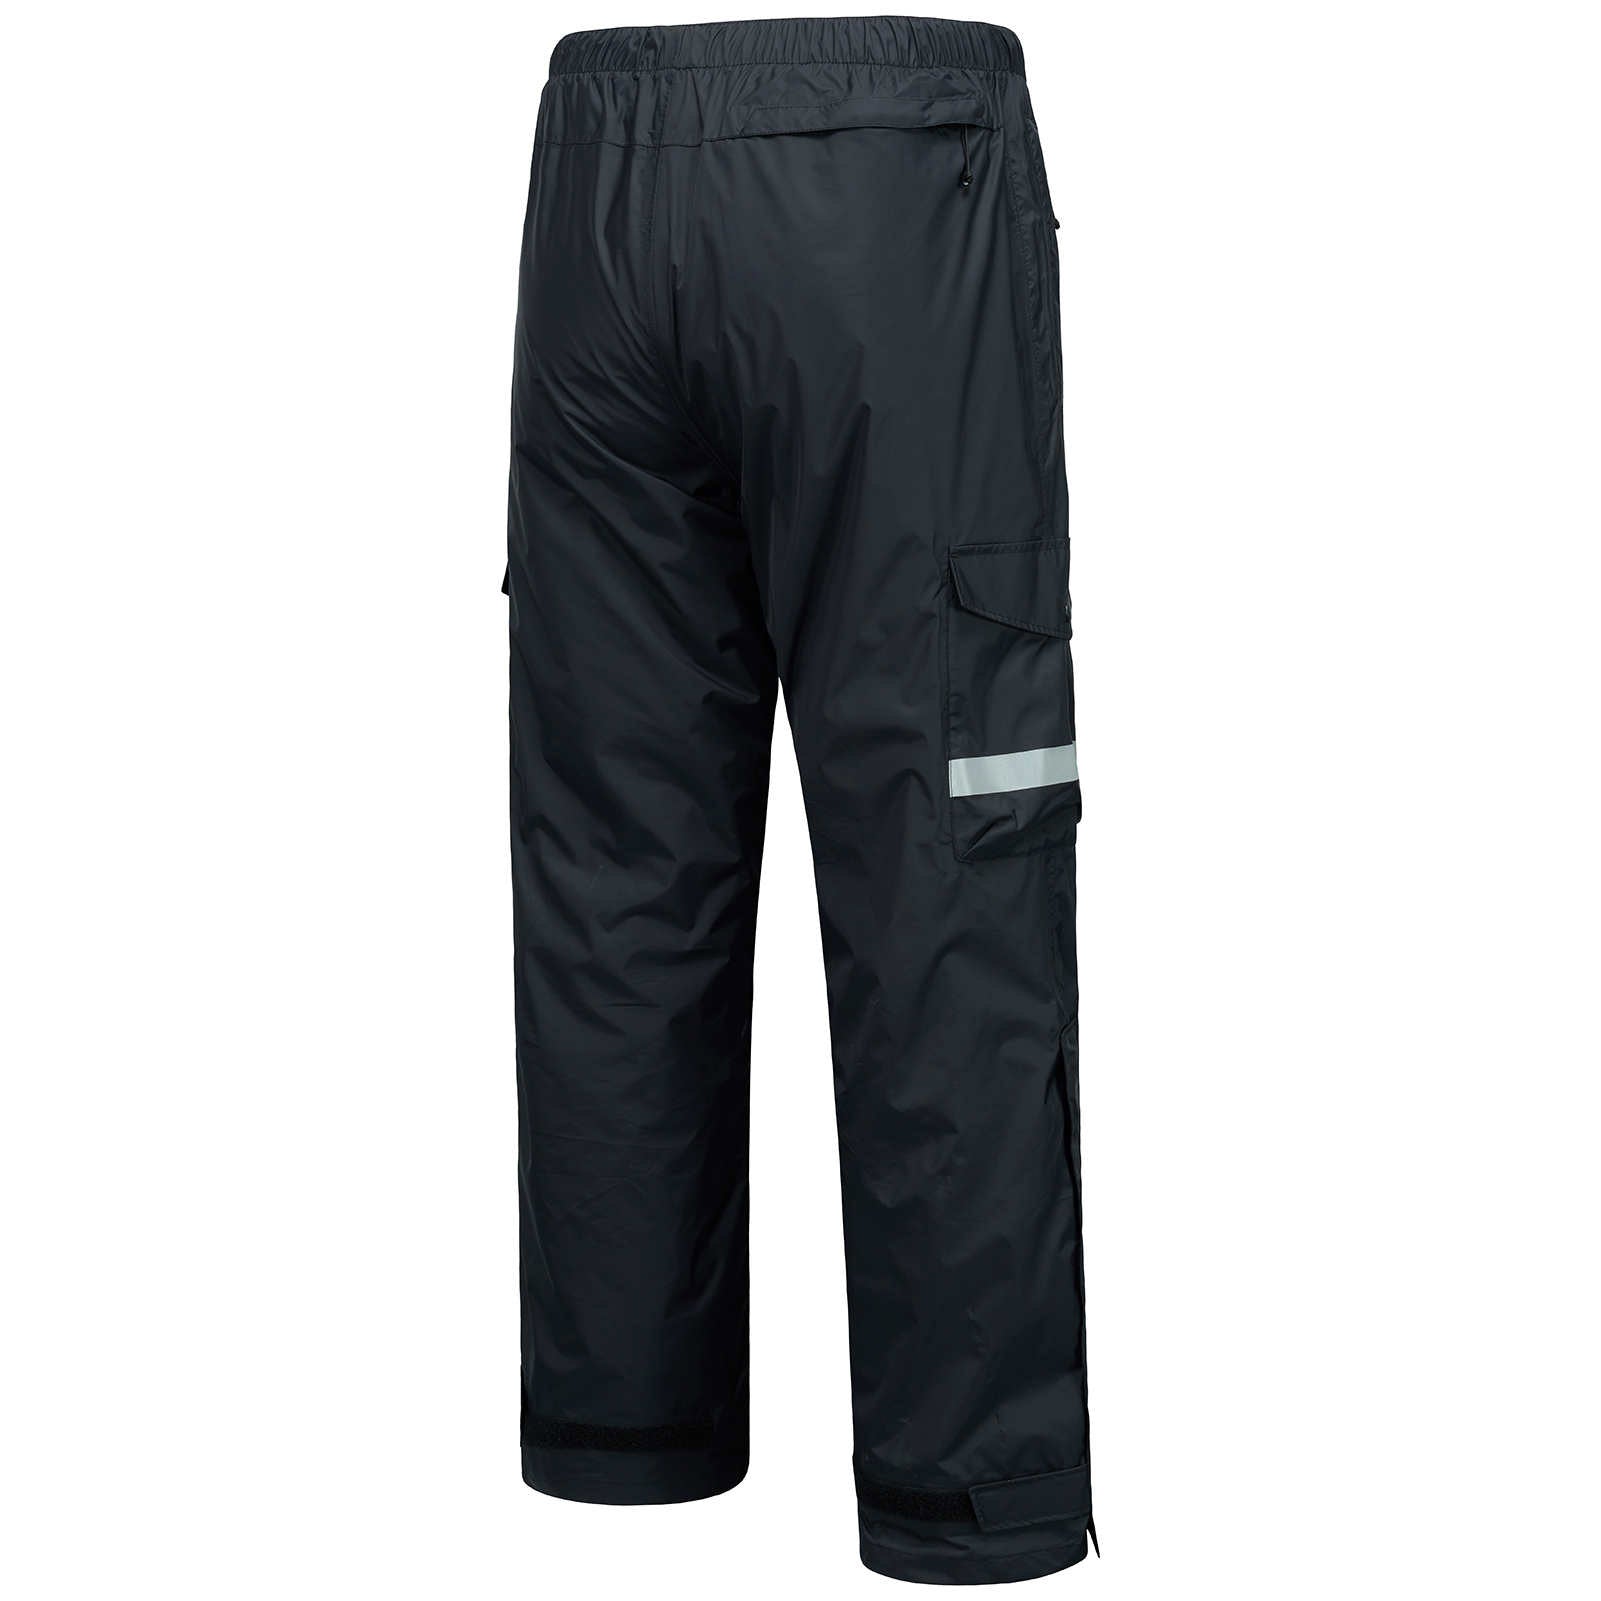 Men’s Complete Breathable Waterproof Rain Pants with 1/2 Zip Legs Black / 2XL (44-46)W x 30L